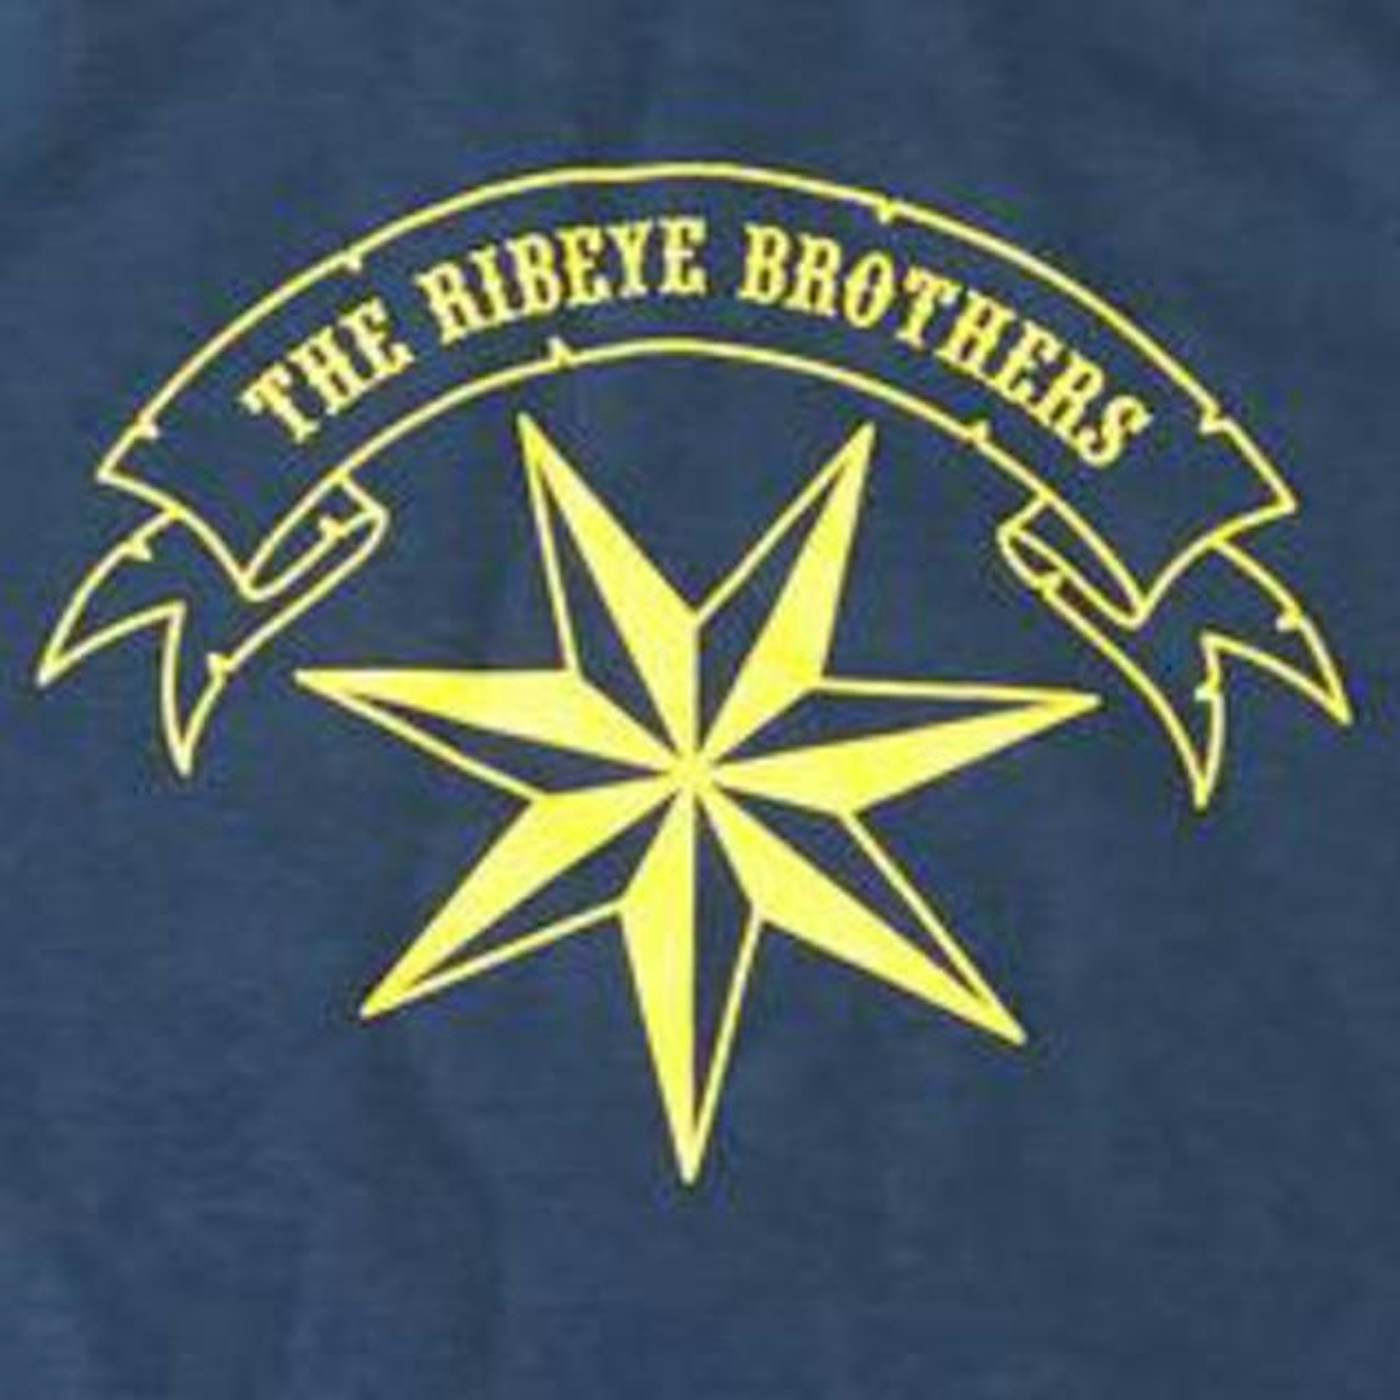 The Ribeye Brothers